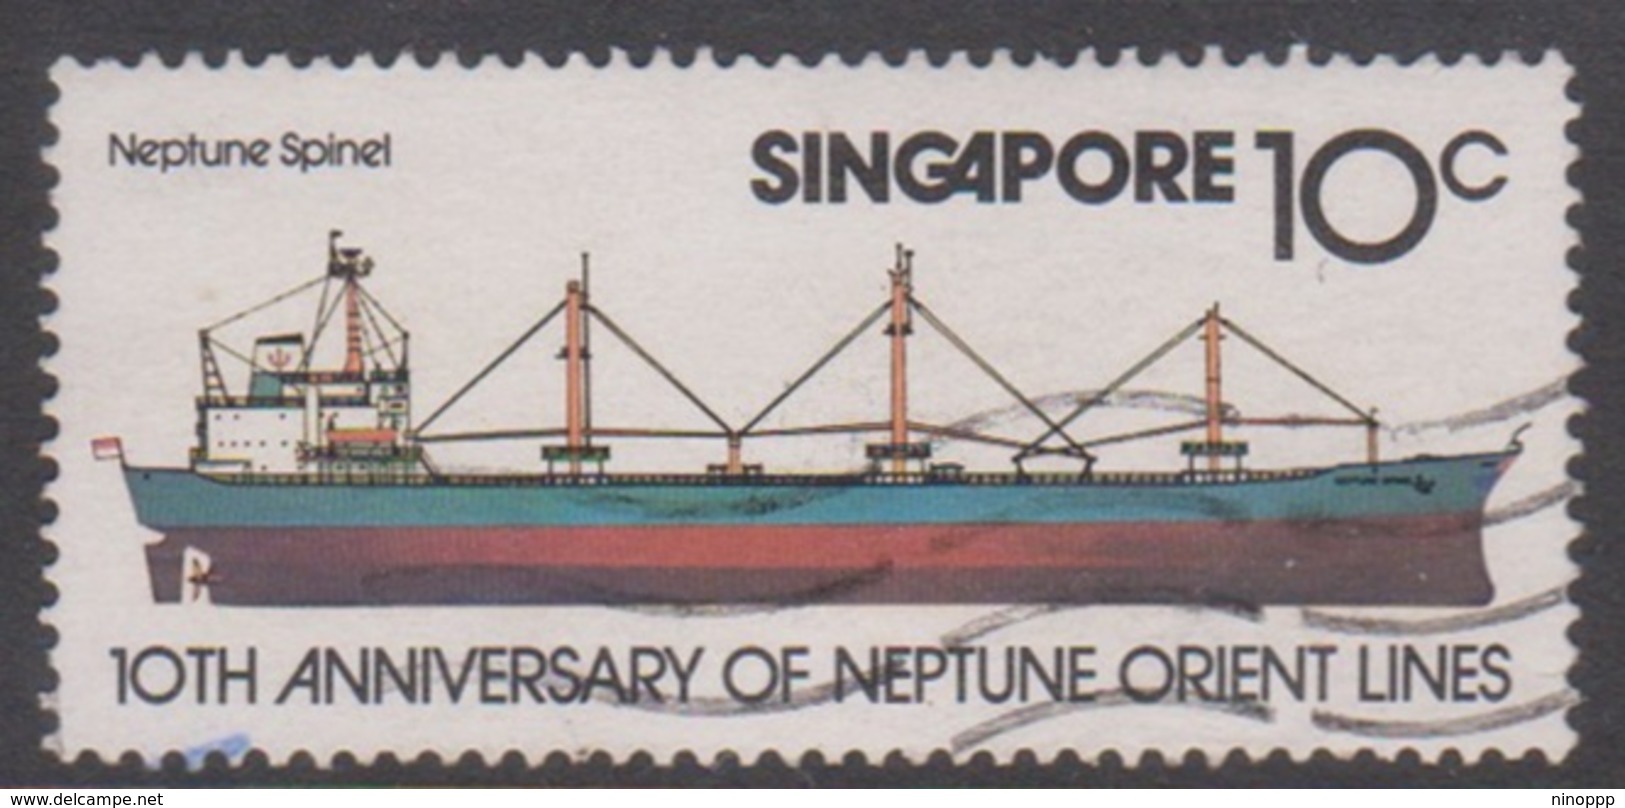 Singapore 339 1978 10th Anniversary Of Neptune Orient Line,10c Neptune Spinel, Used - Singapore (1959-...)